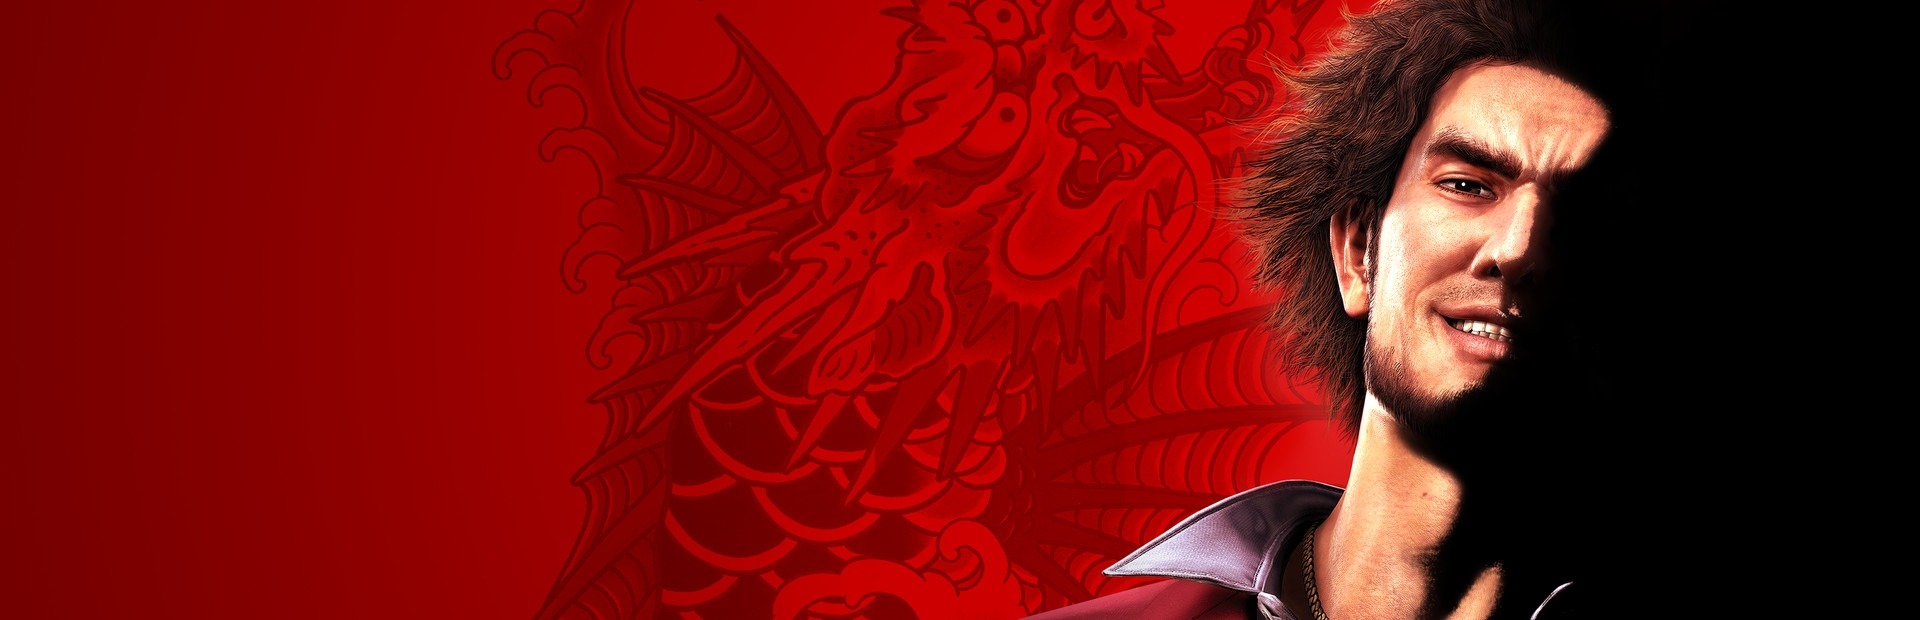 Yakuza: Like a Dragon Hero Edition on